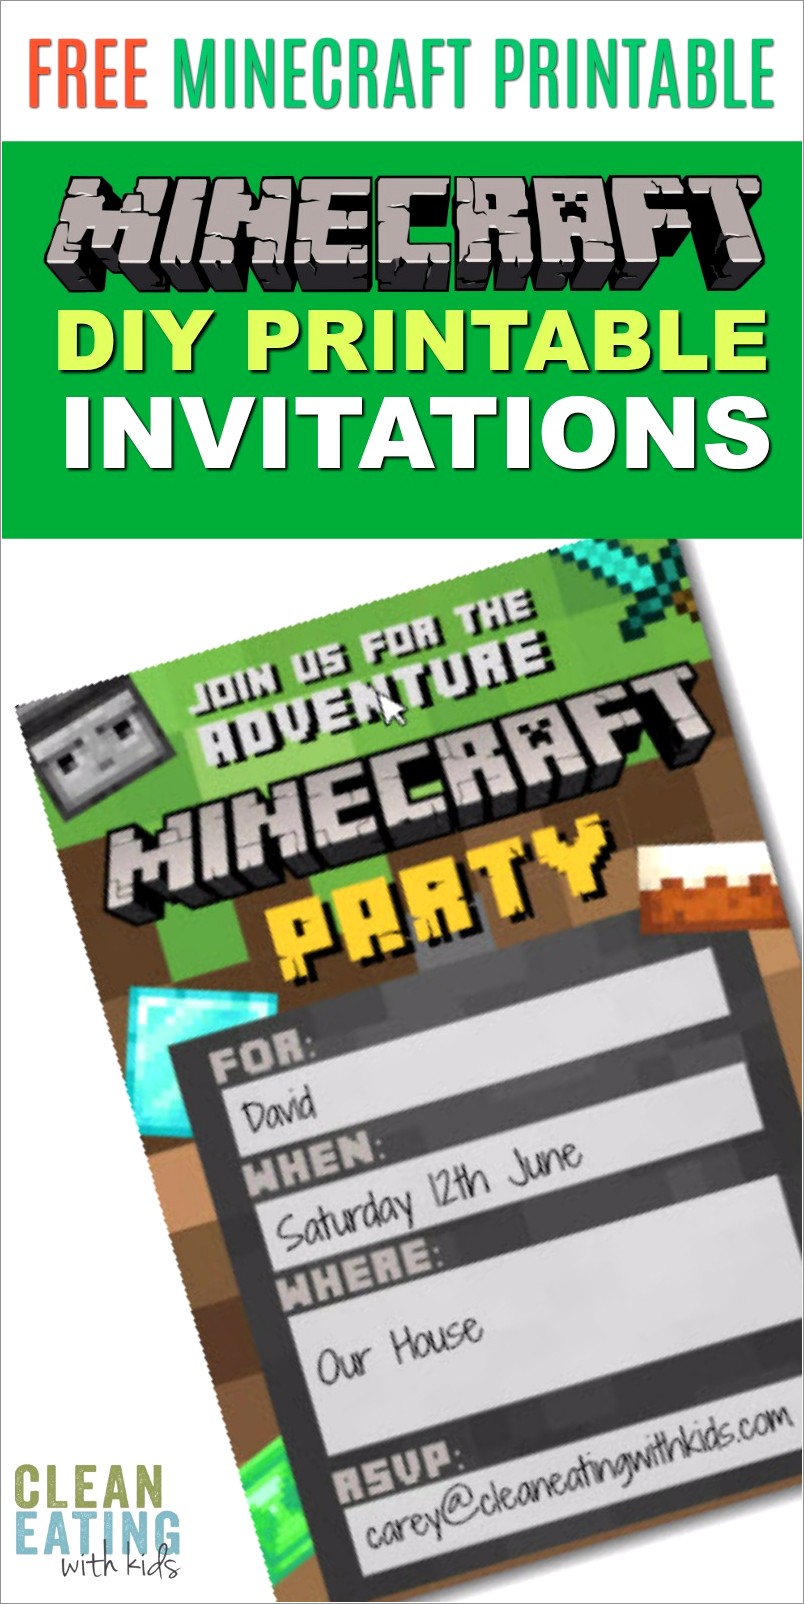 Downloadable Free Printable Minecraft Invitations